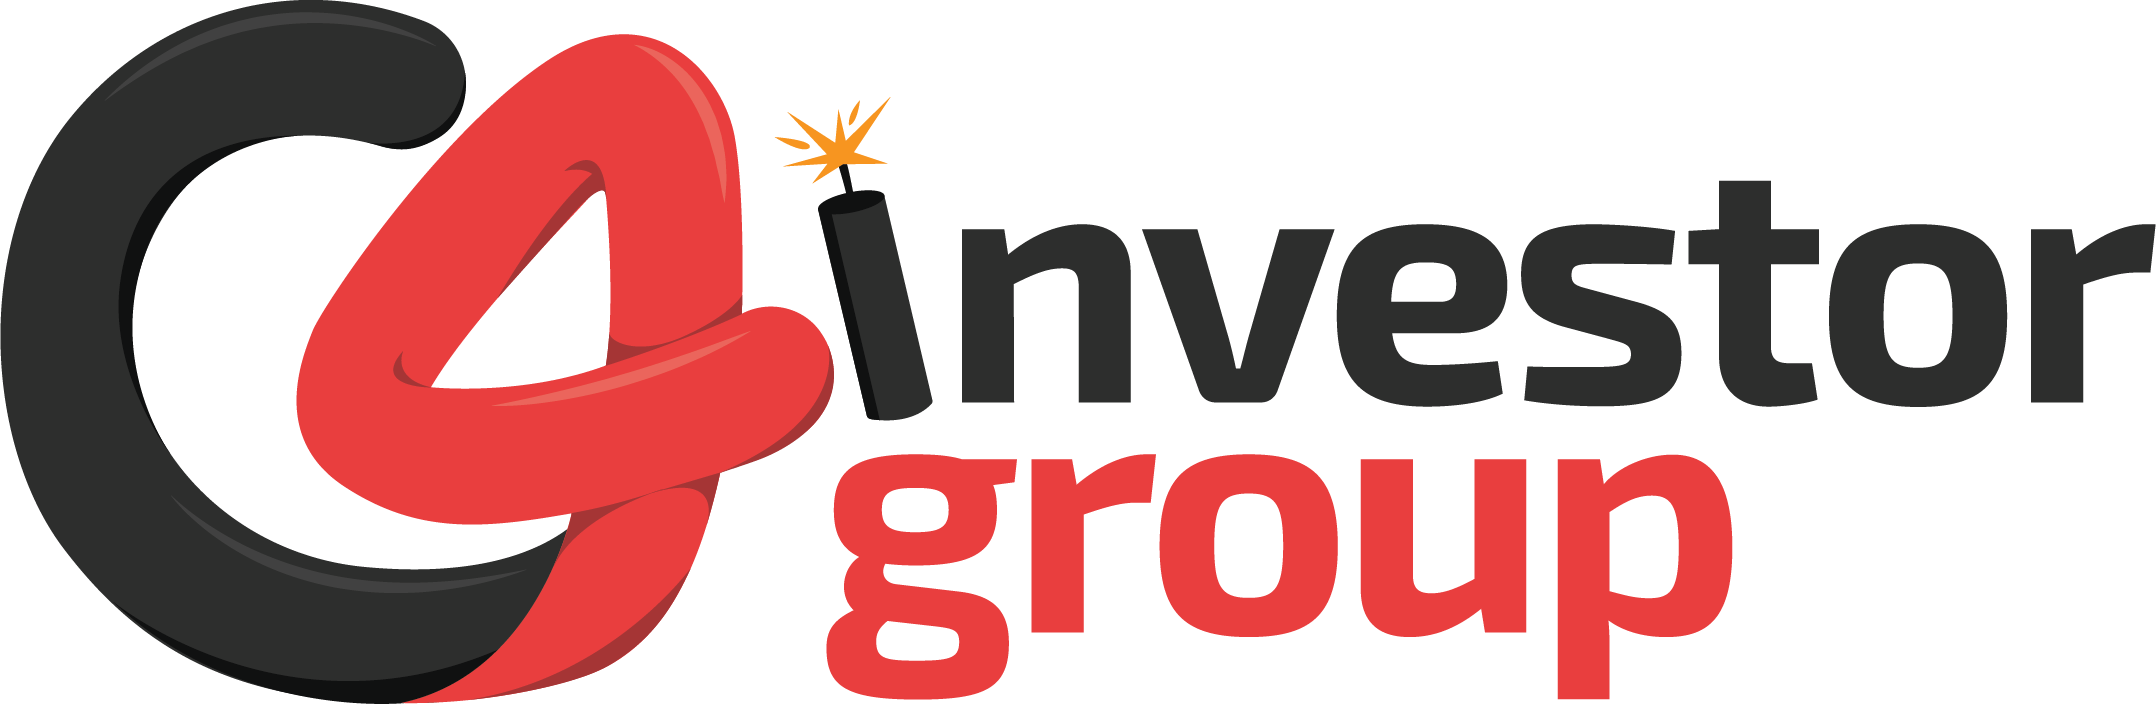 C4 Investor Group